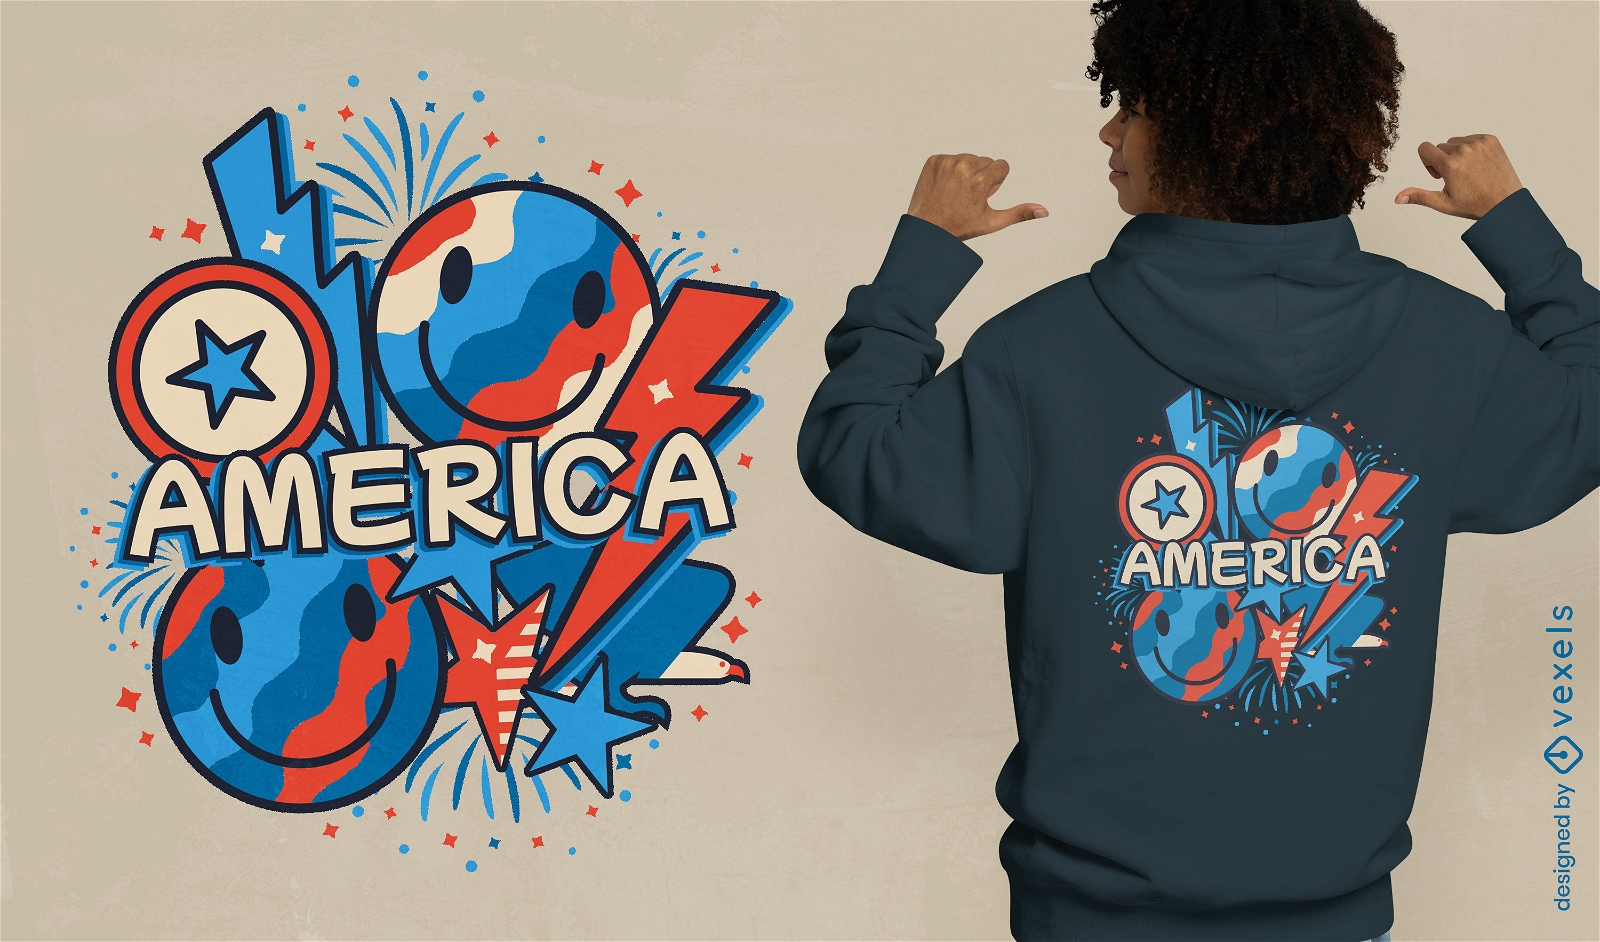 Explosive America t-shirt design